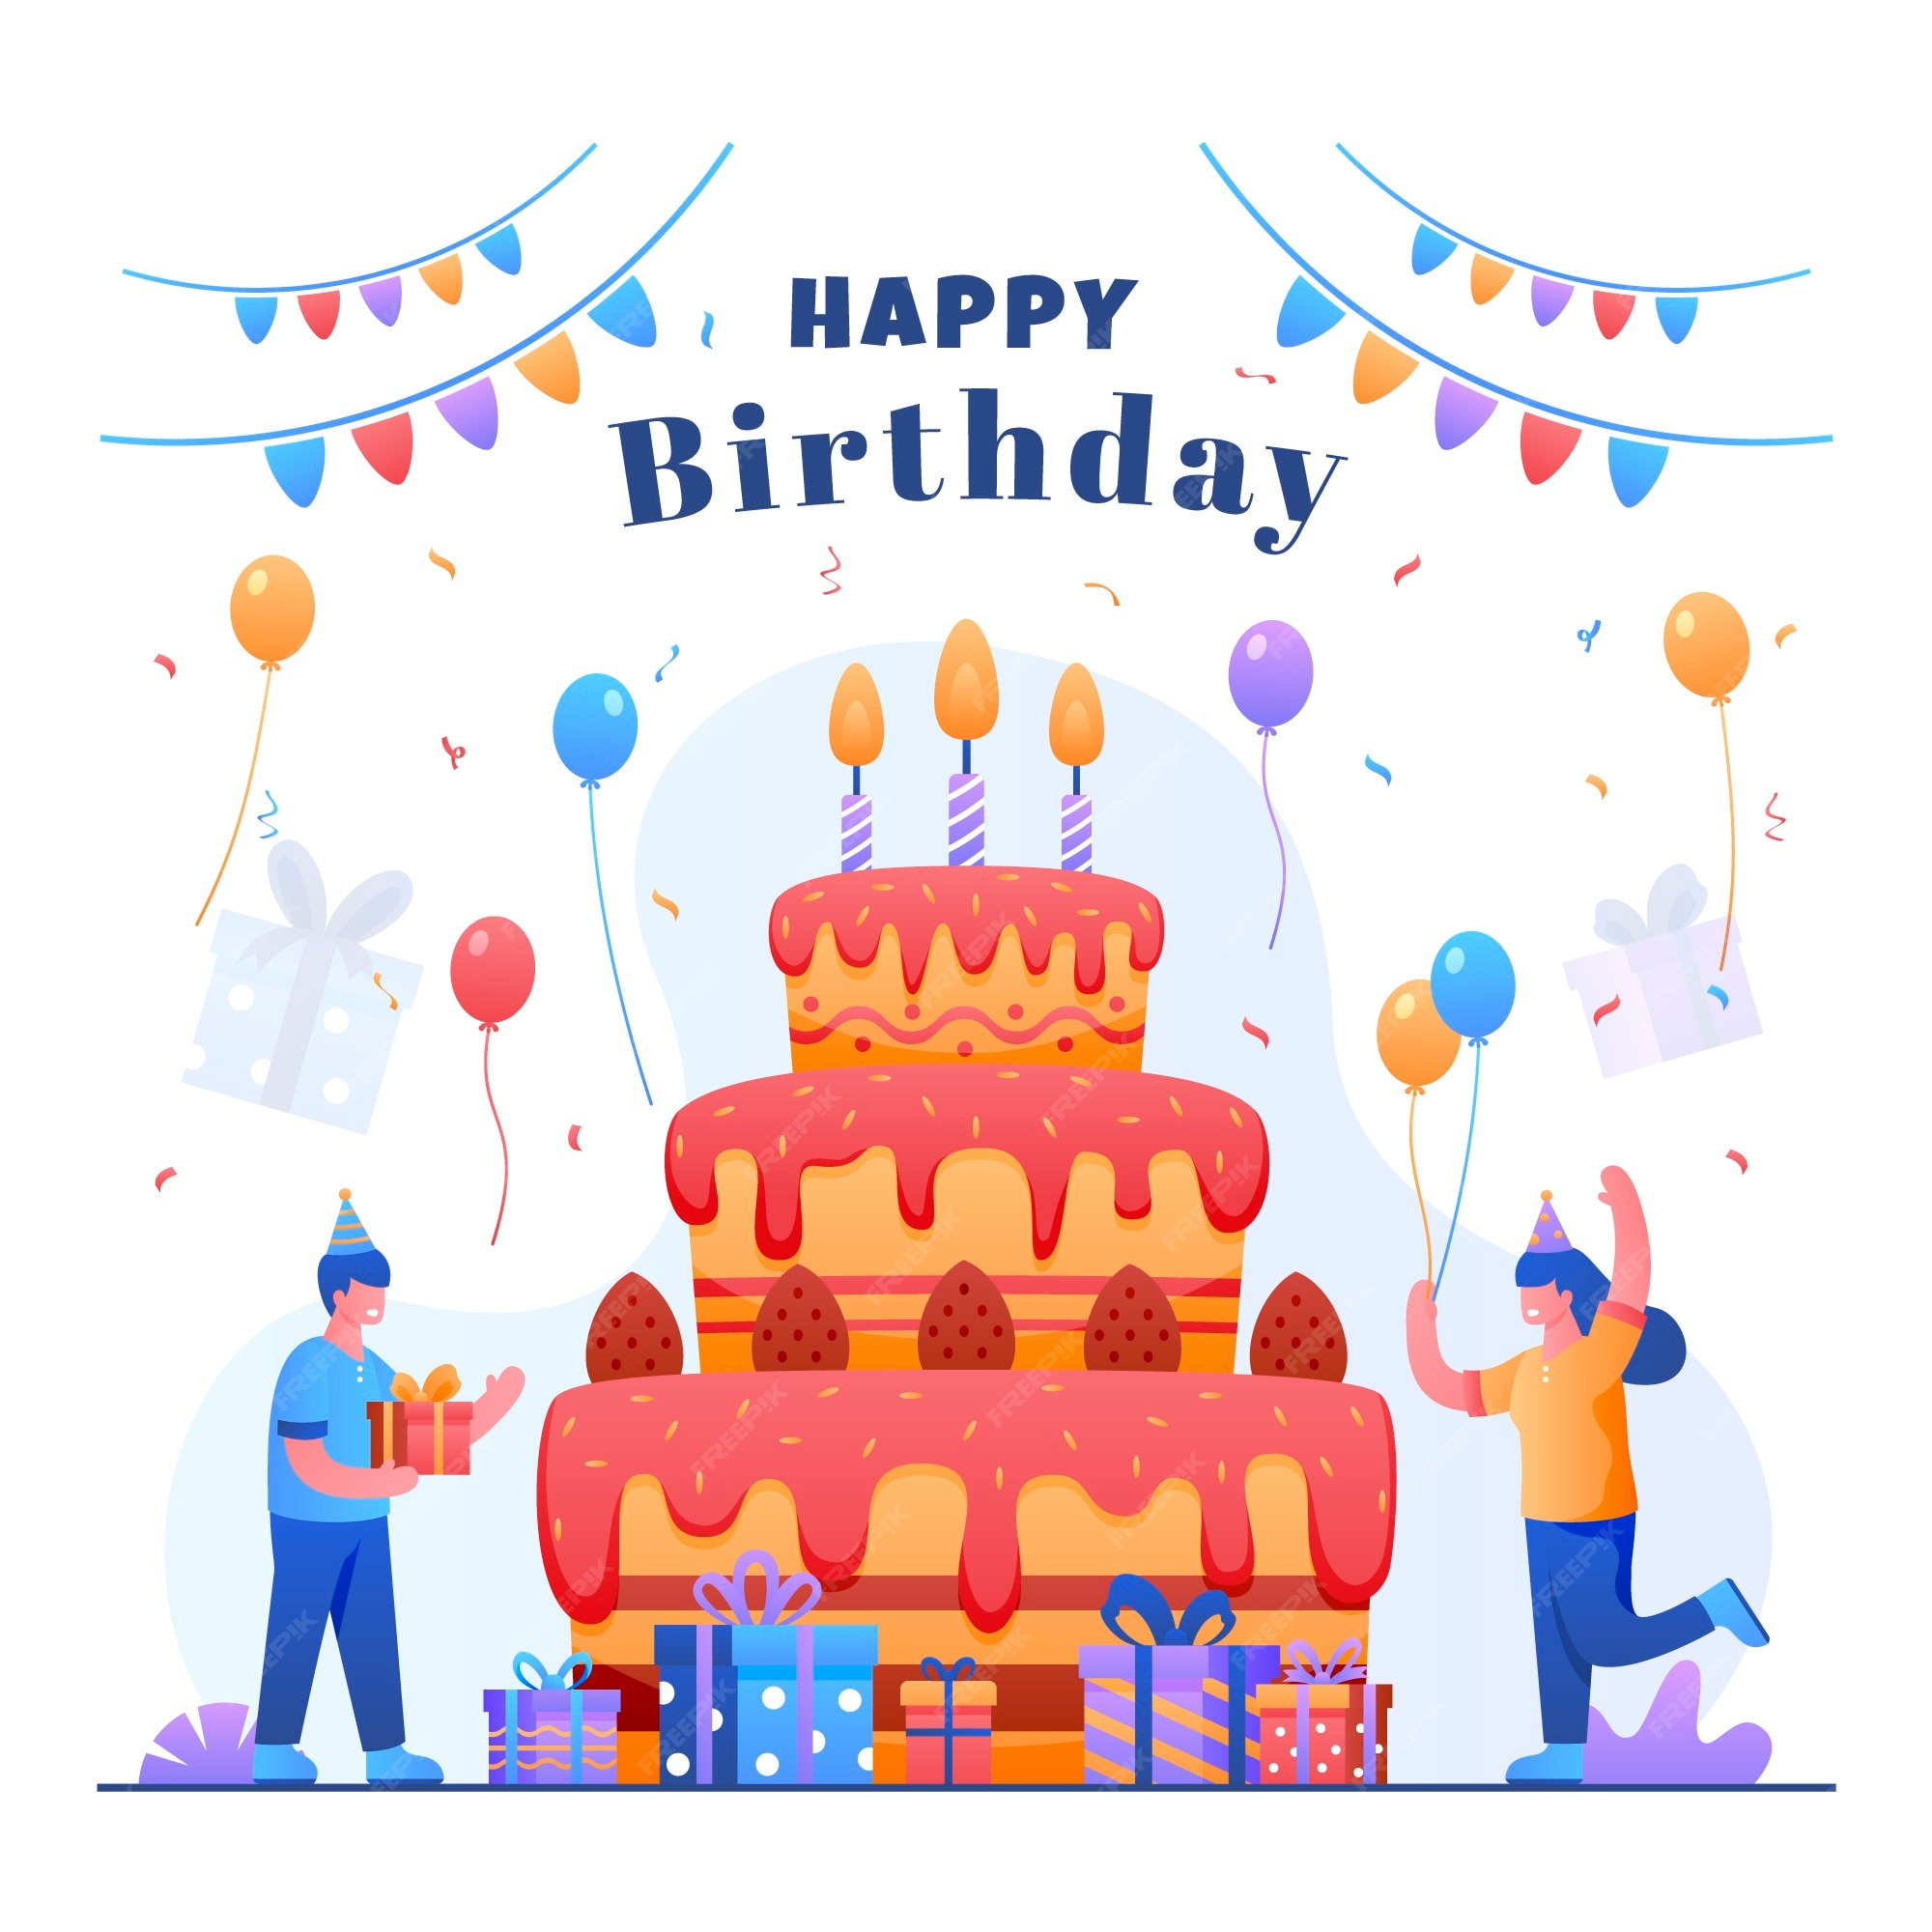 Birthday cake illustration Vectors & Illustrations for Free Download |  Freepik